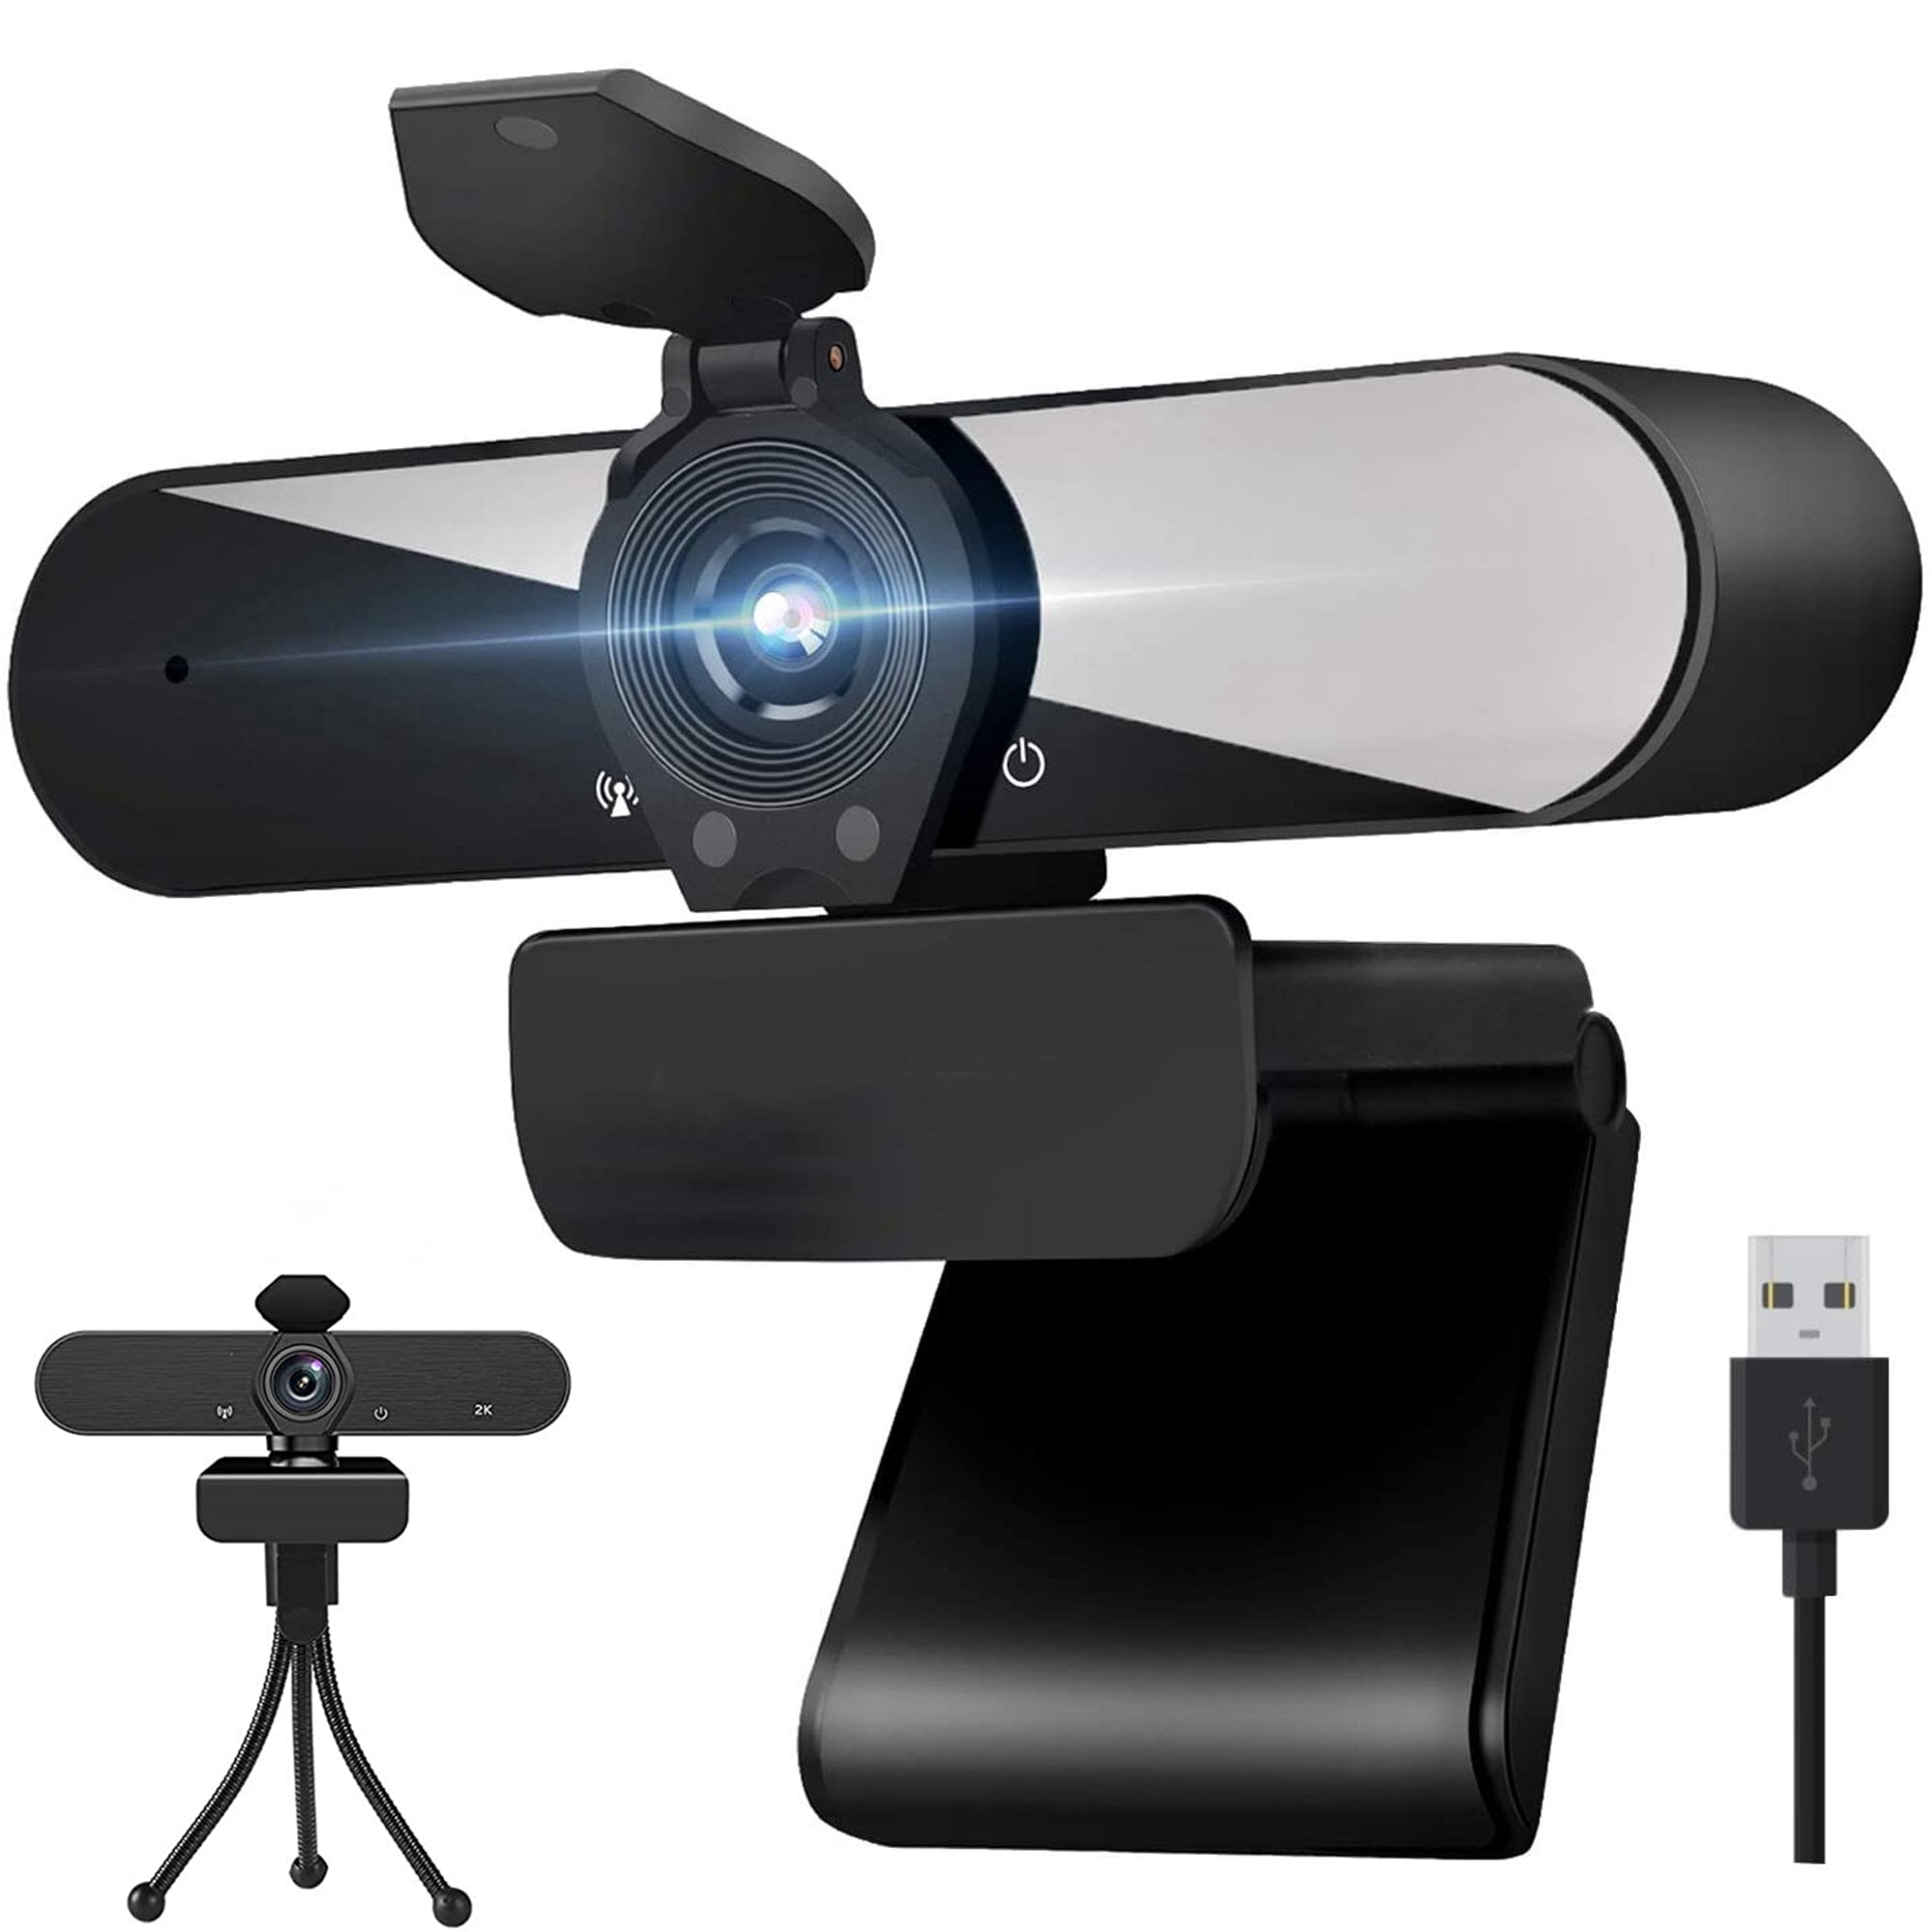 Webcam 1080P with Microphone USB PC Streaming Webcam Web Camera Widescreen Computer Webcam Camera for Desktop Laptop PC Mac Video Calling Conferencing Recording 